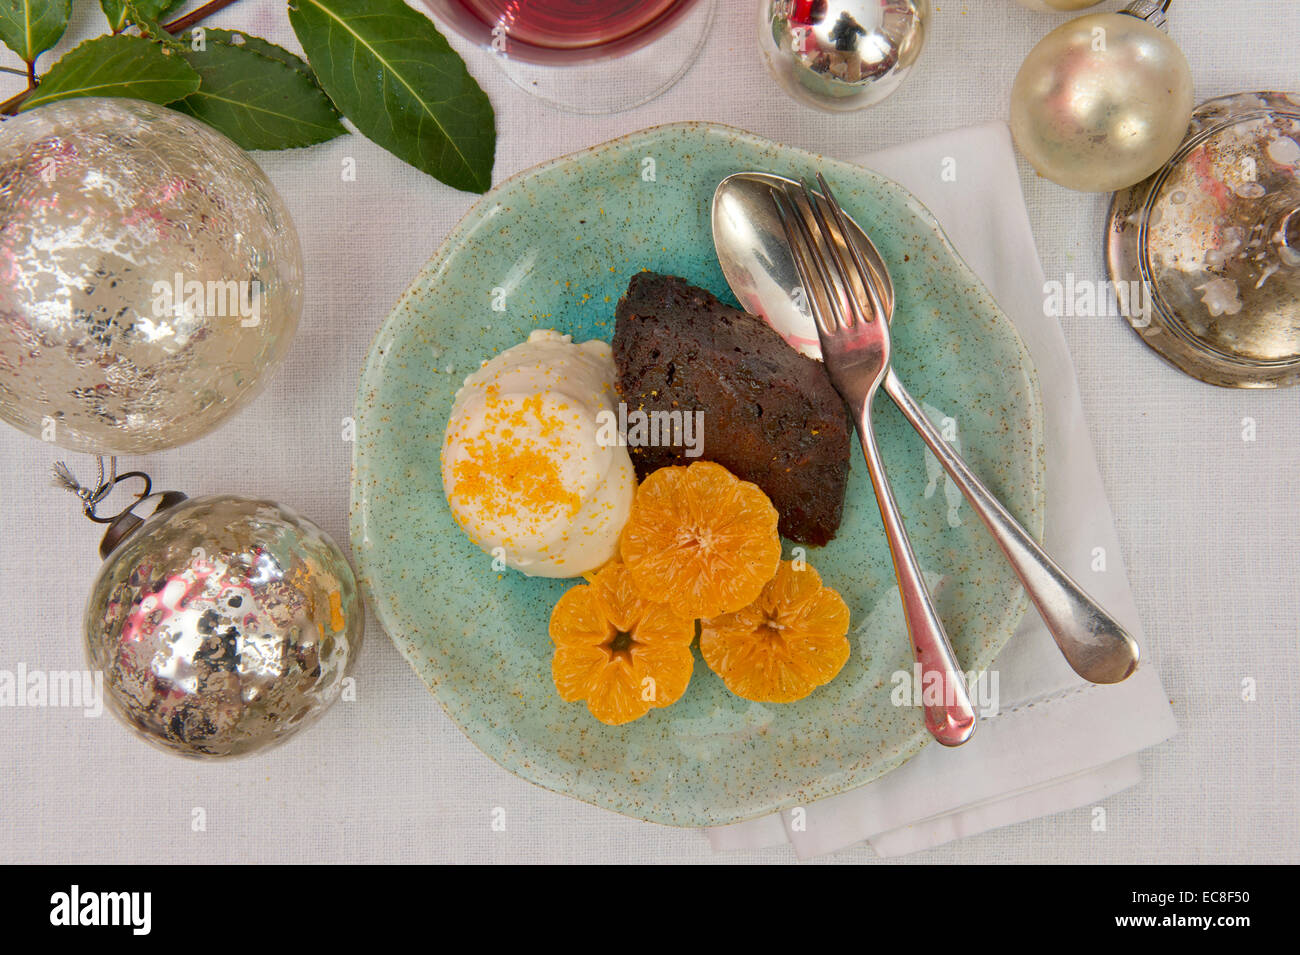 Christmas foods including a whole roast turkey Stock Photo